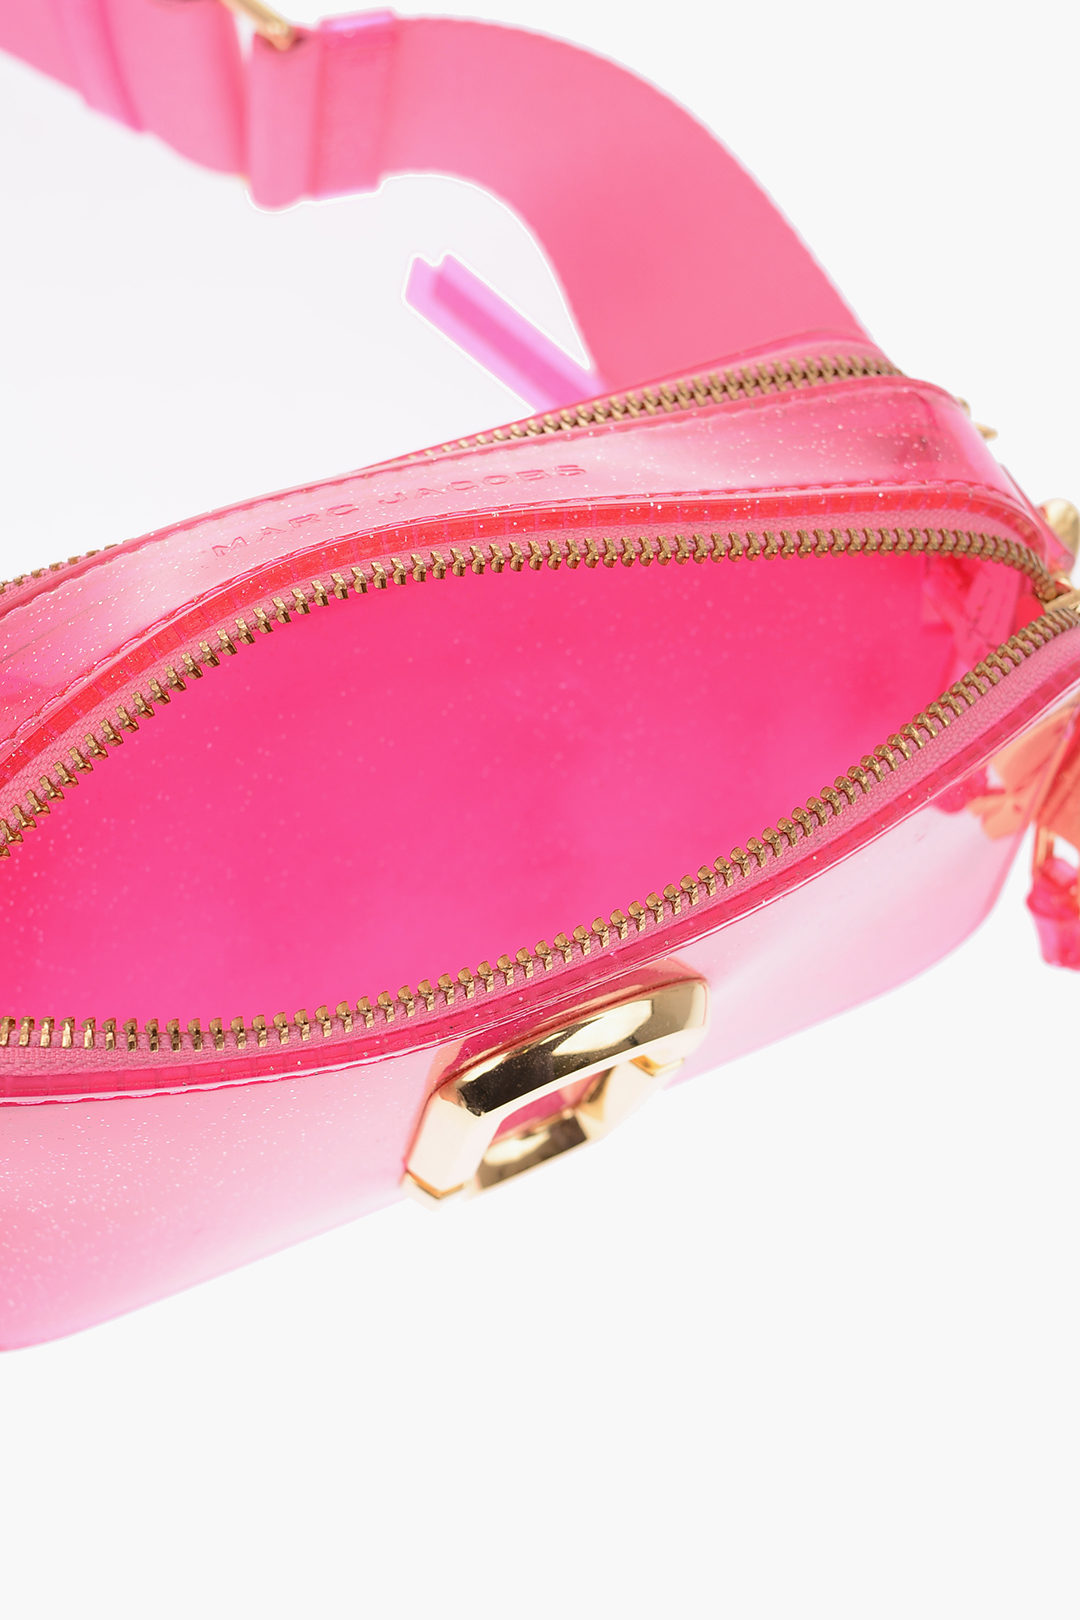 Marc Jacobs The Jelly Glitter Snapshot Crossbody Bag